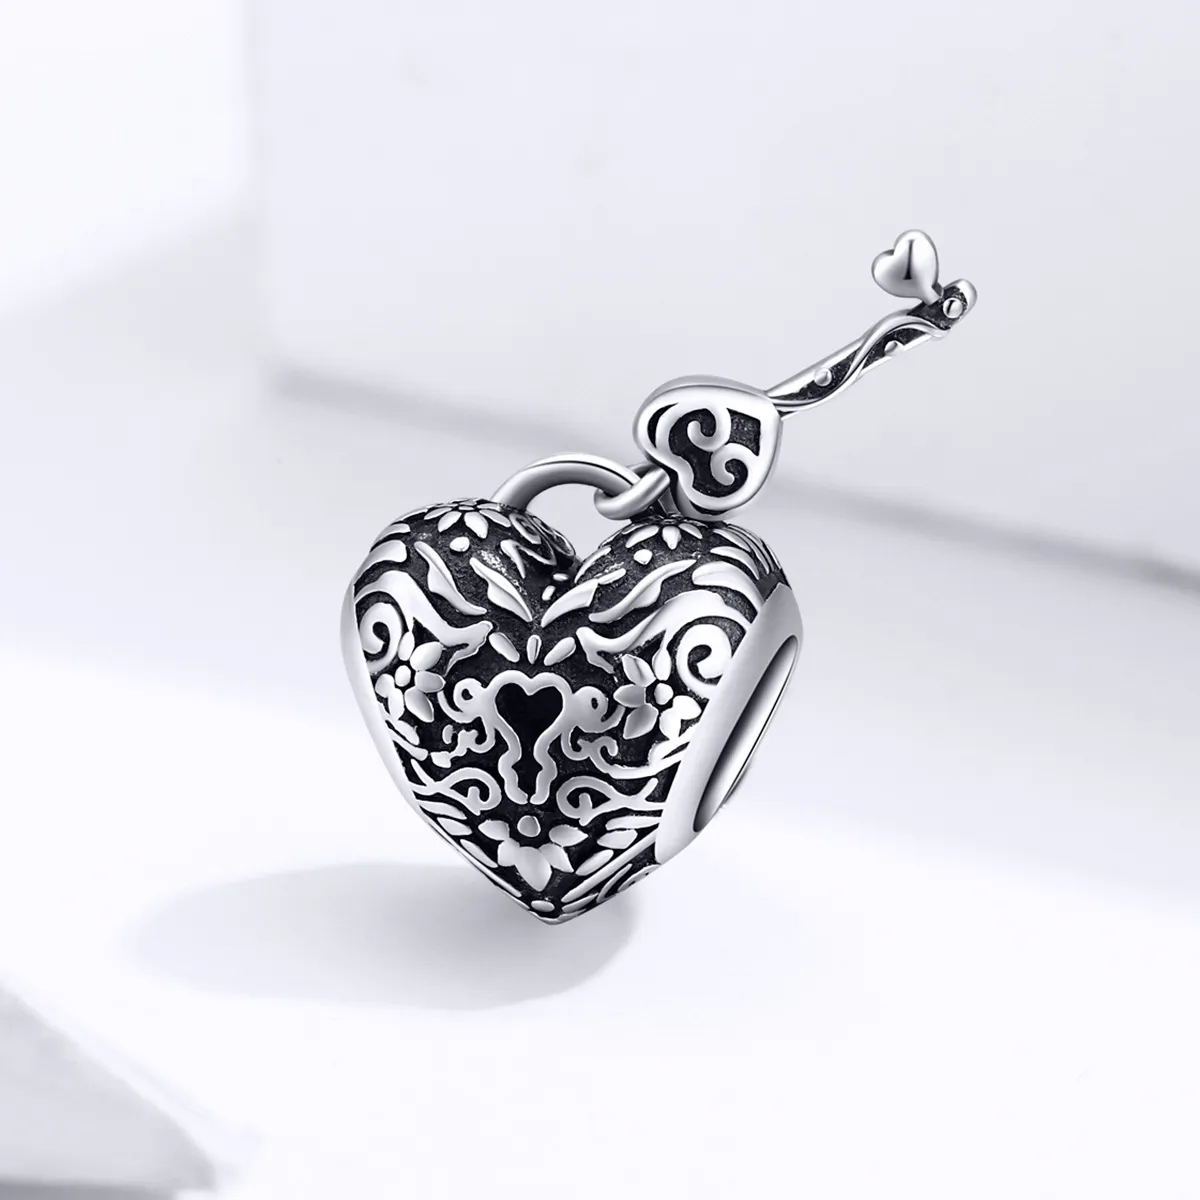 Pandora Stil Inimă Cuișoare Charm - SCC1447